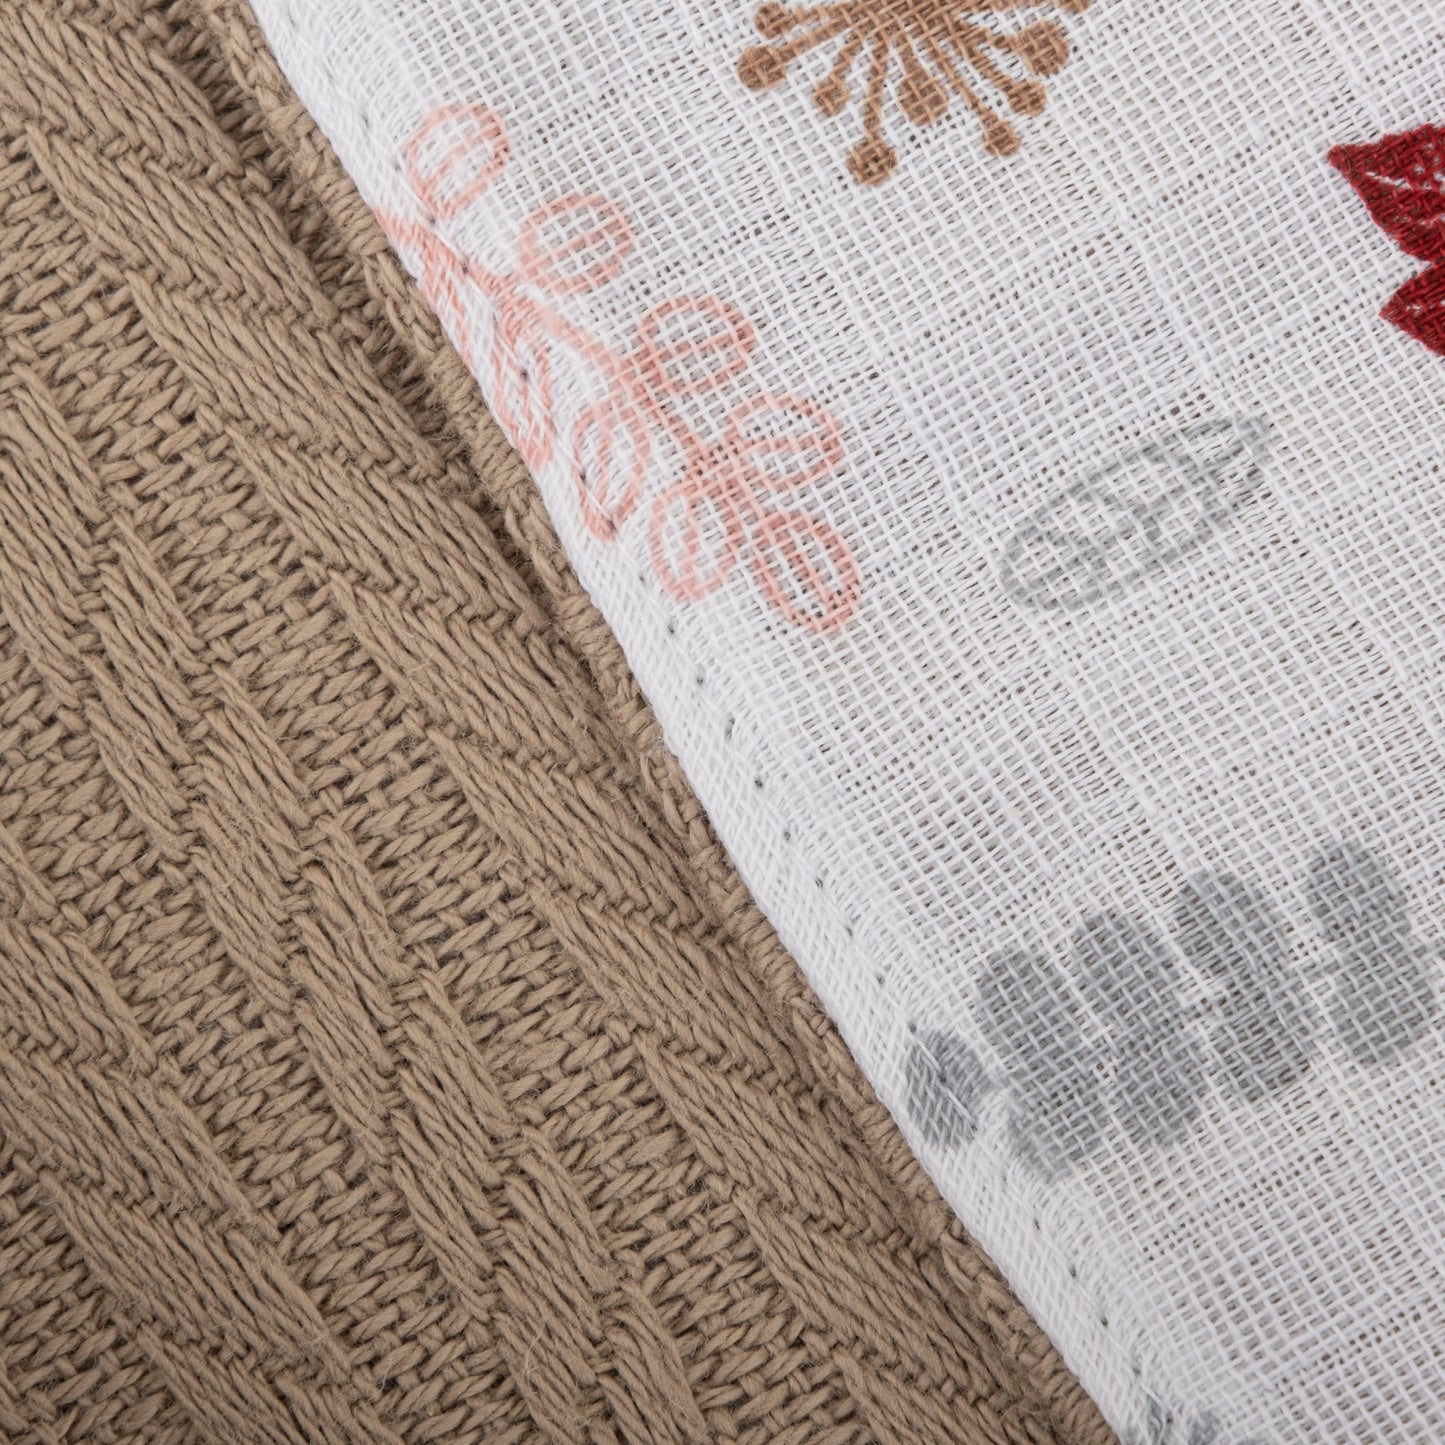 Pique Blanket - Double Side - Earthen Knitting - Spring Patterns